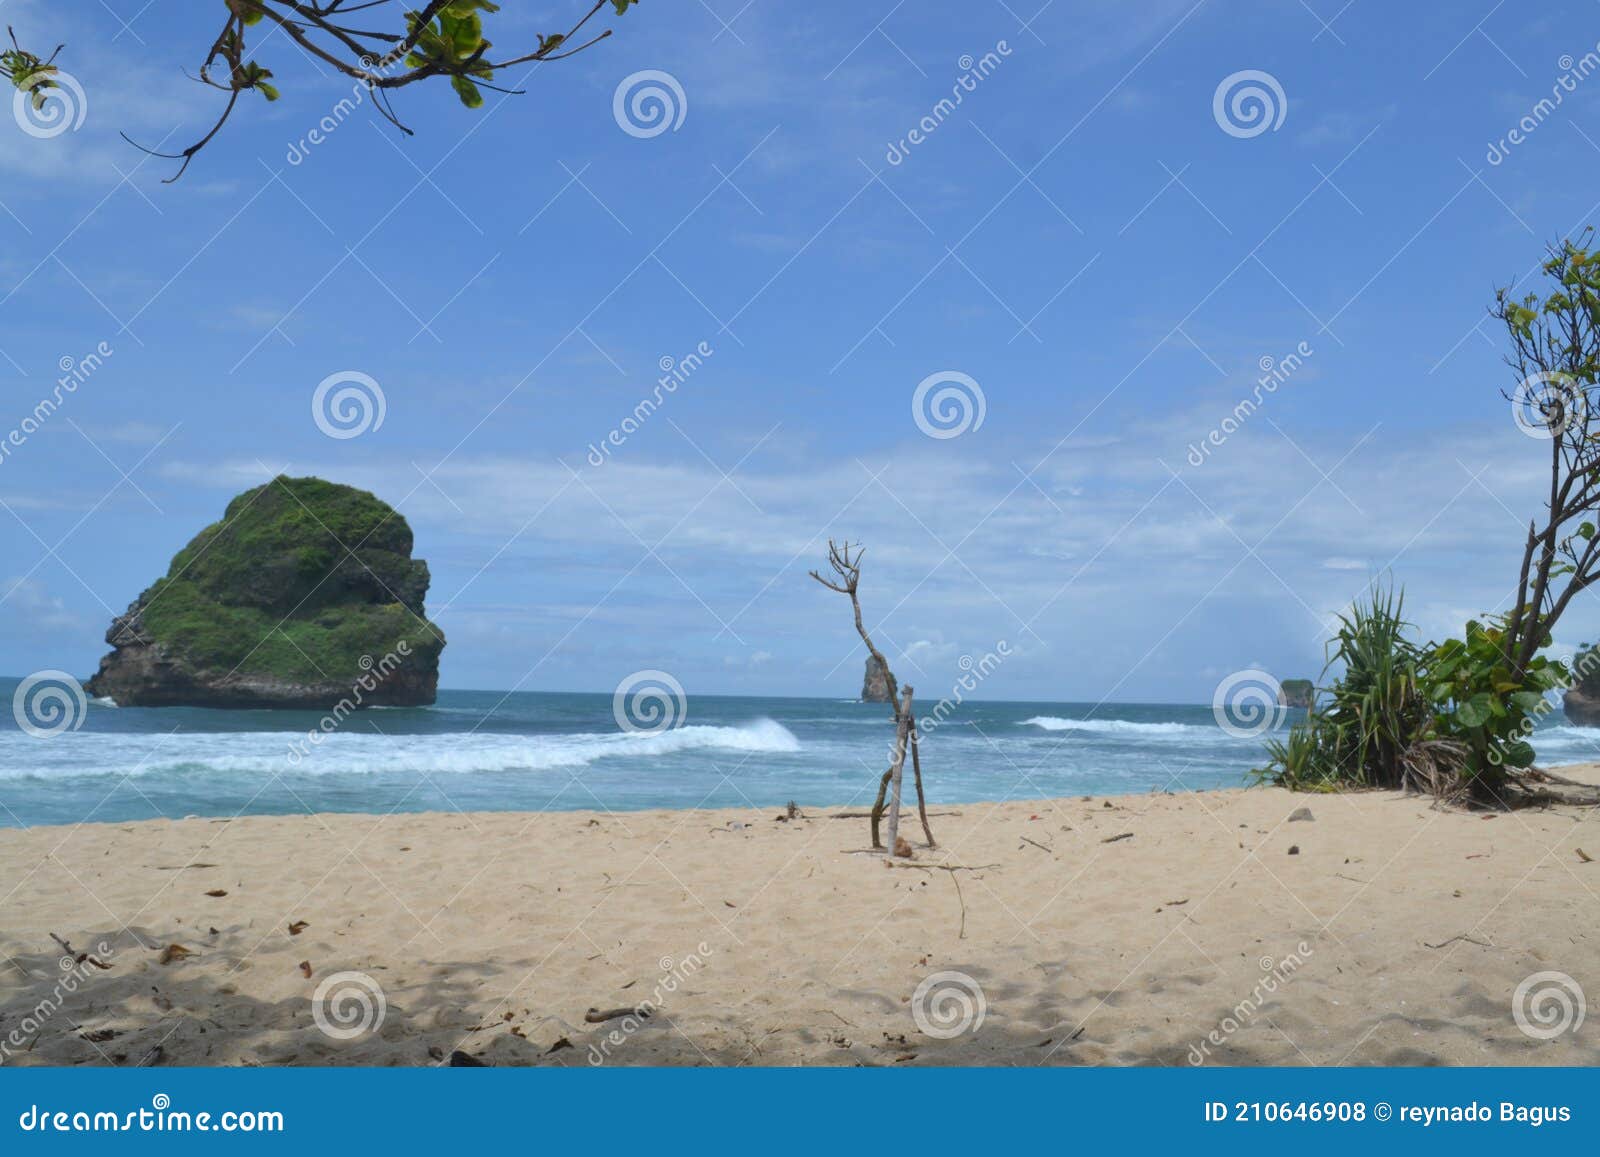 view in this beach goa cina, malang